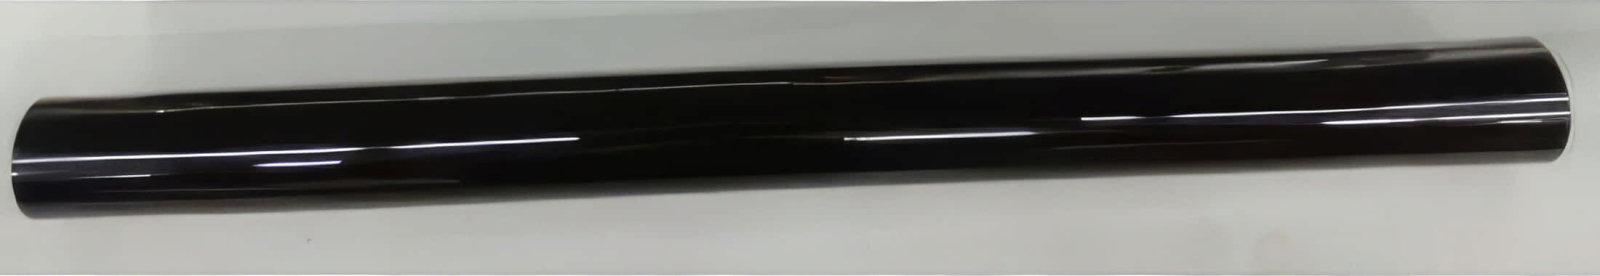 Труба пластиковая (1/2 часть) для пылесоса NORMANN AVC-111 (HJW-1308-40)